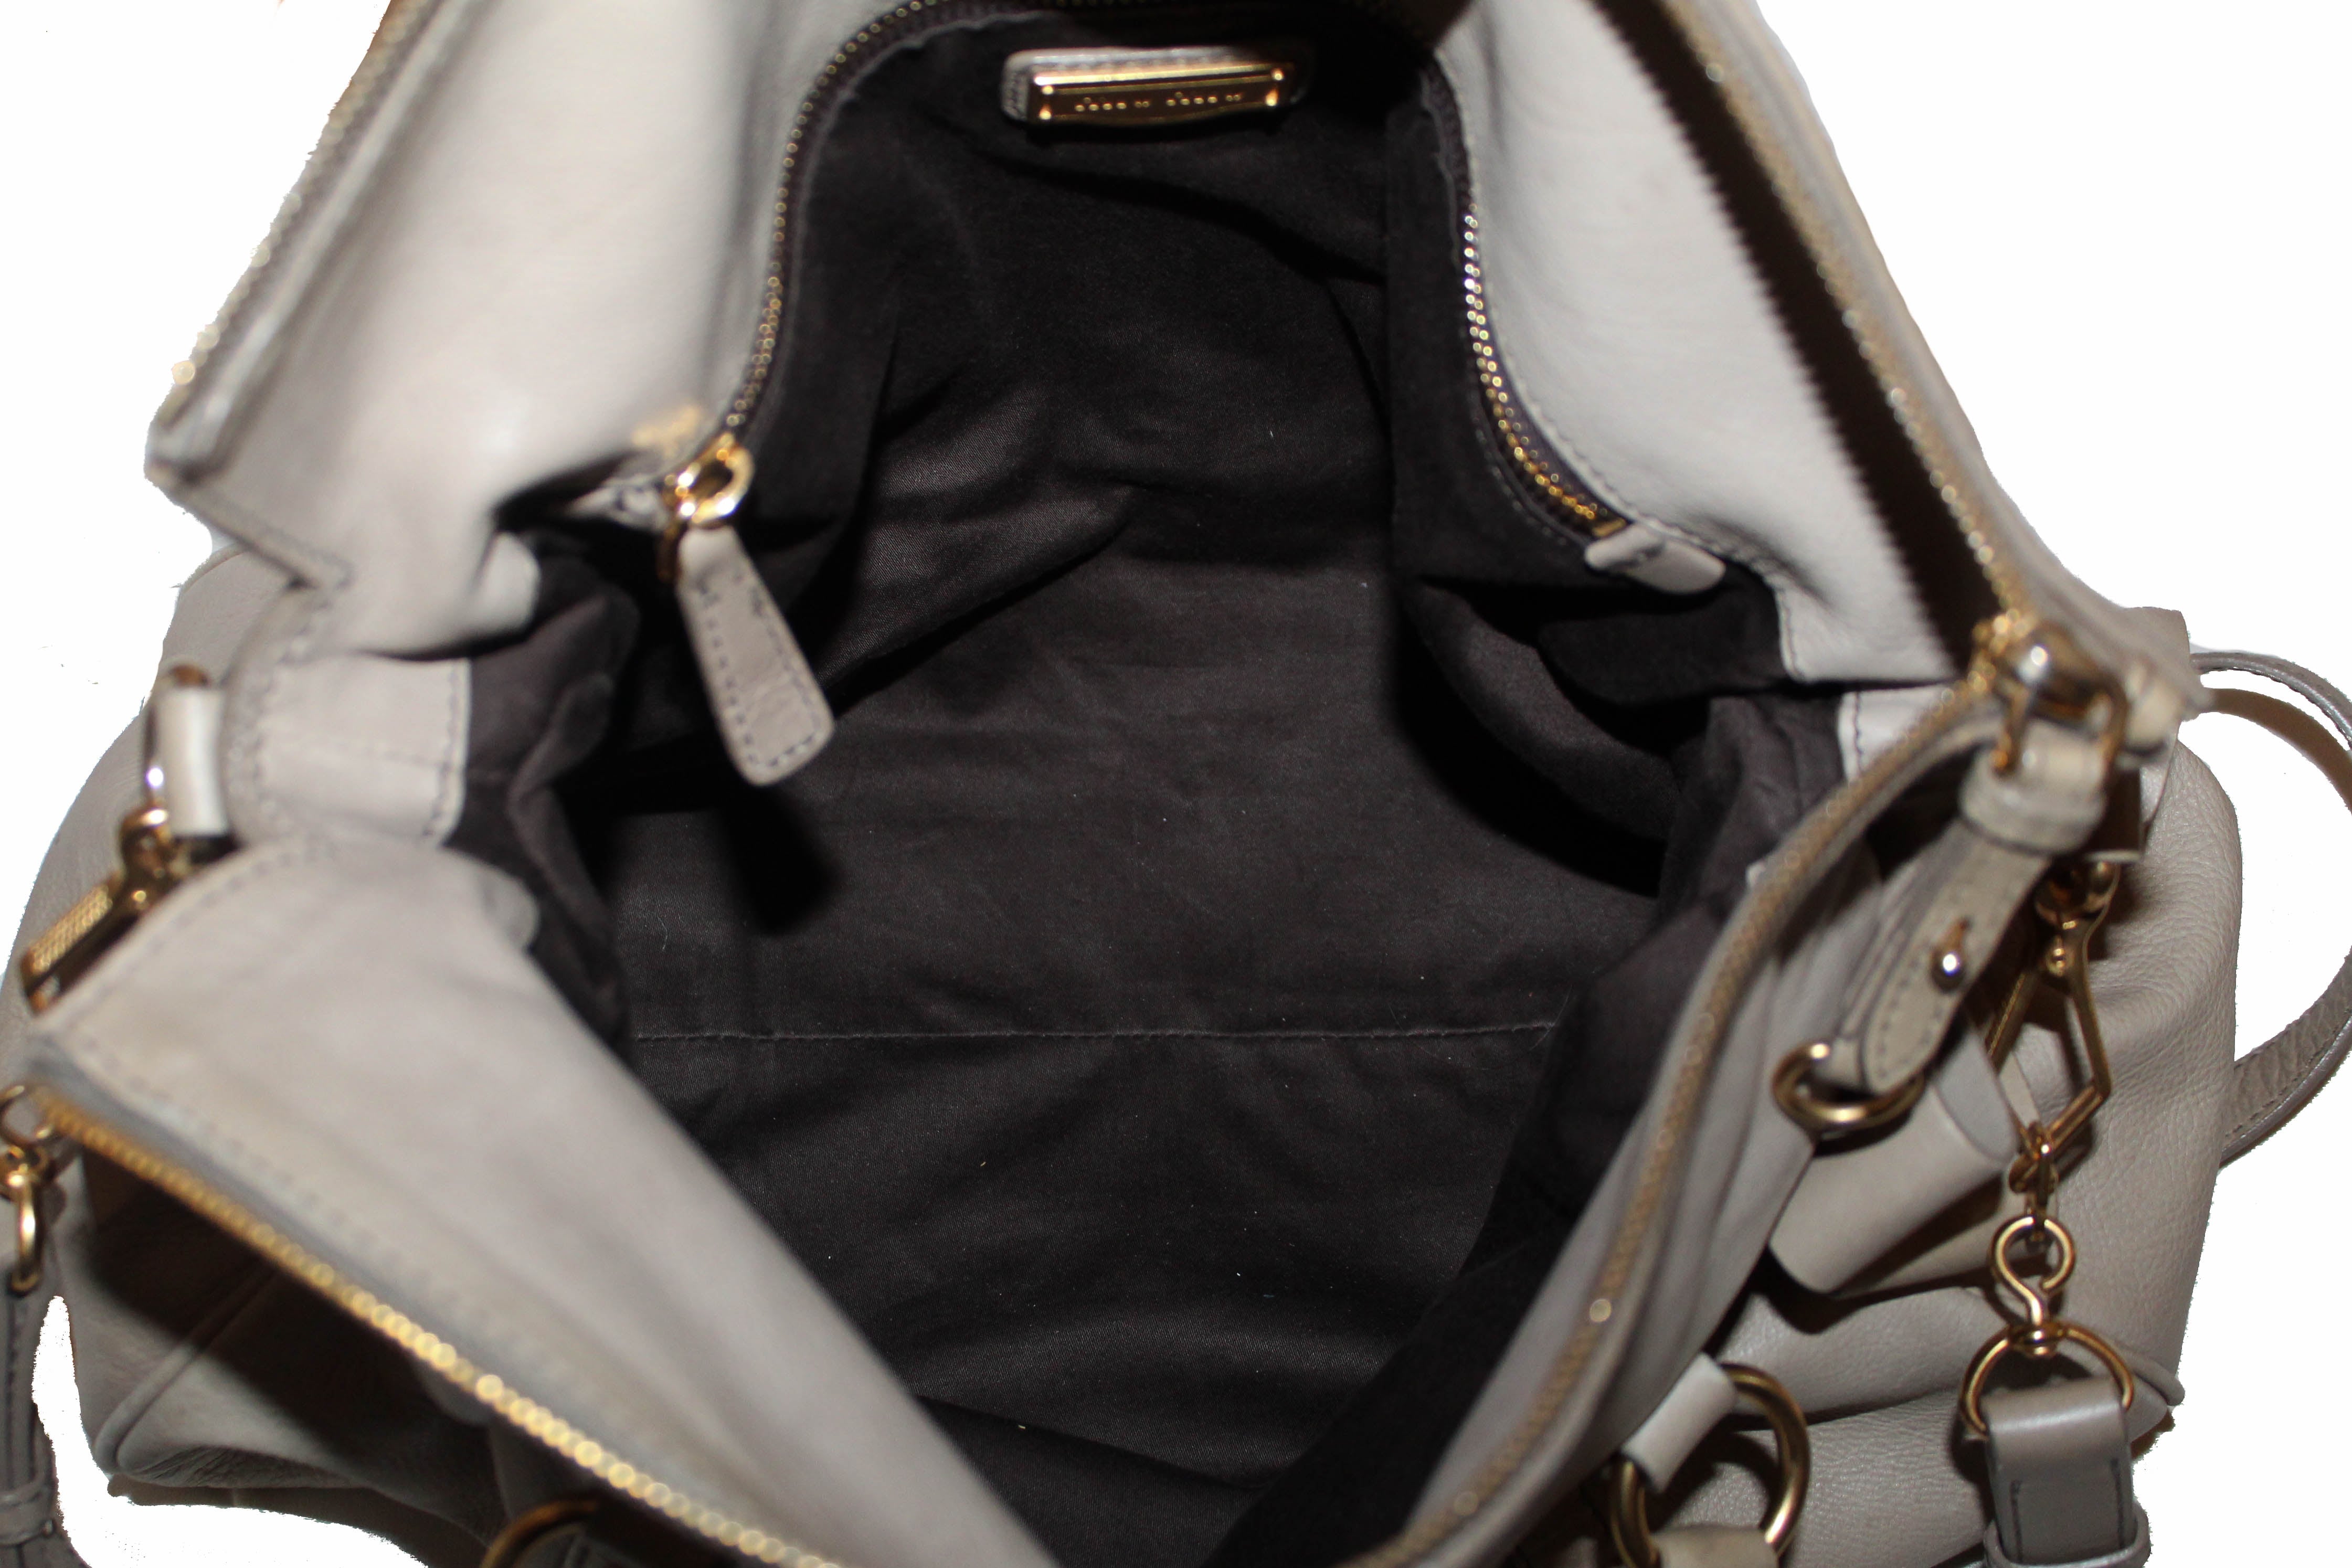 Authentic Miu Miu Pomice Vitello Lux Leather Bow Top Handle Bag